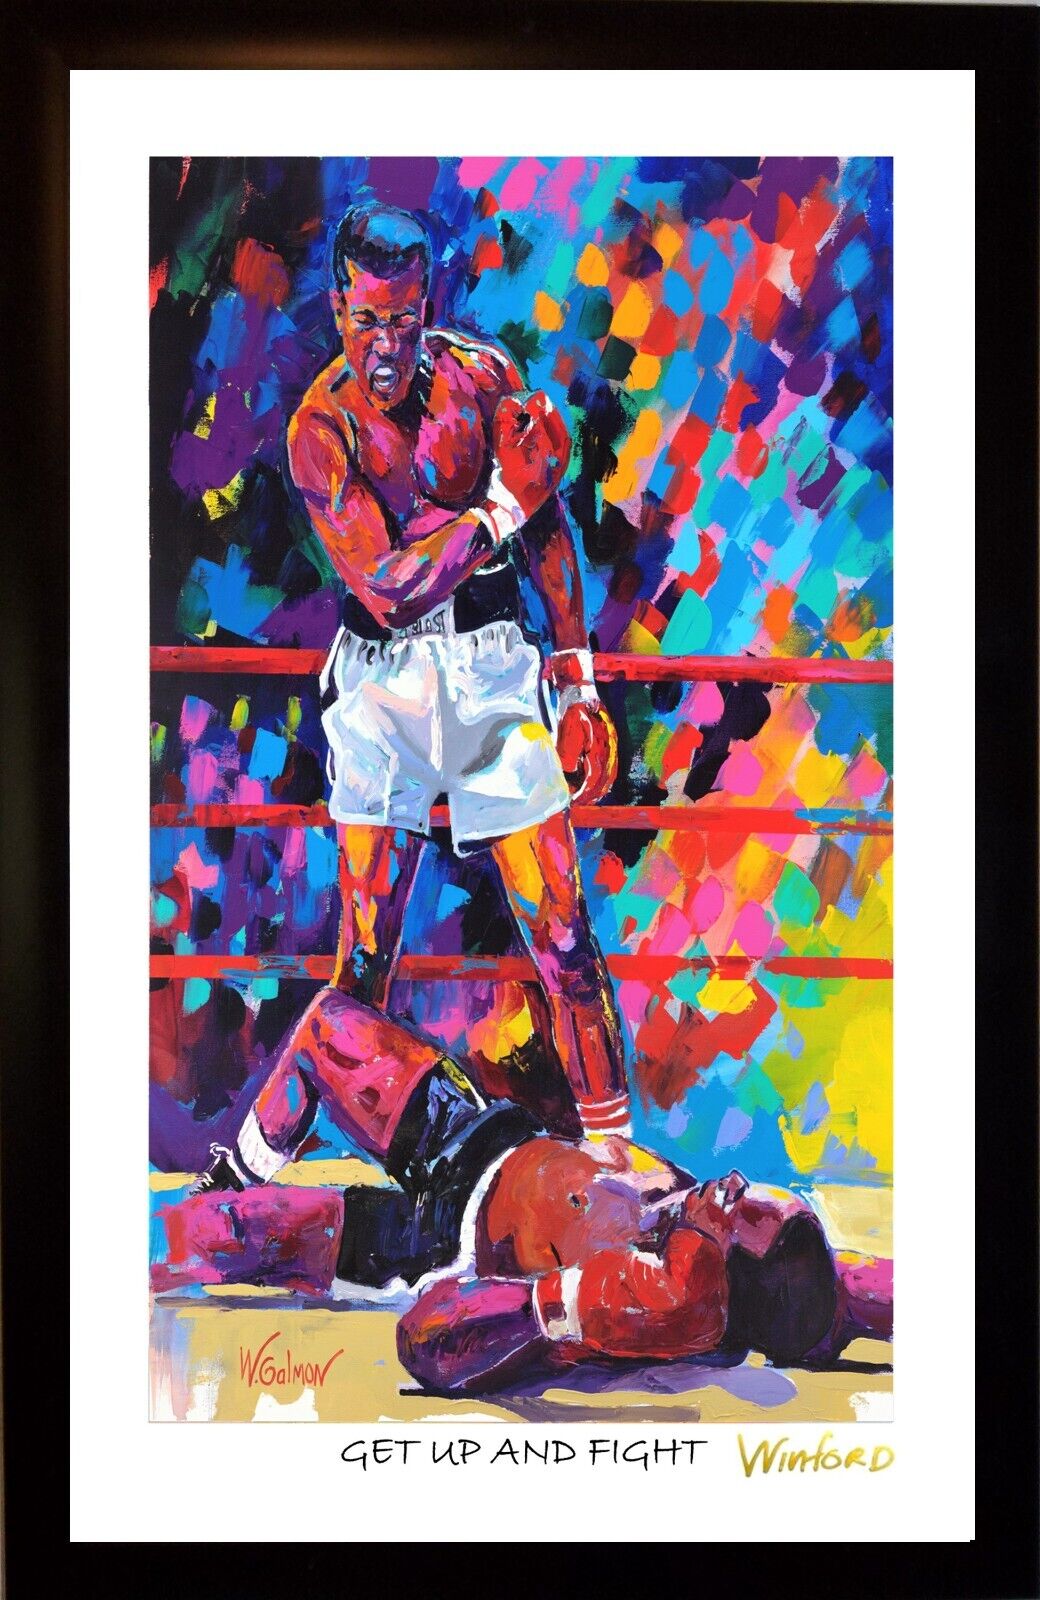 Sale Muhammad Ali Sonny Liston Premium Art Print Was $129.95 Now $89.95